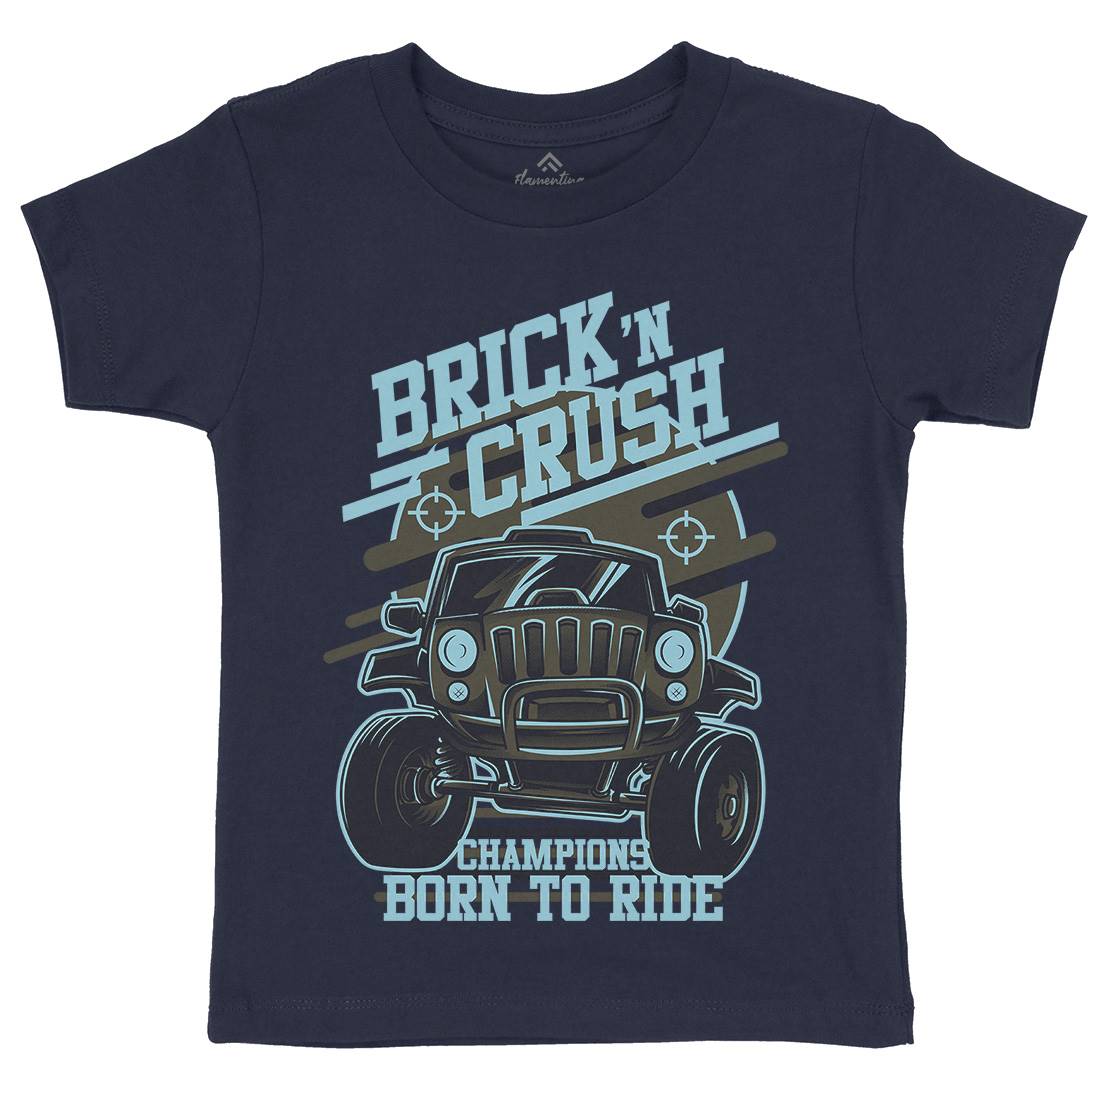 Brick Crush Kids Crew Neck T-Shirt Cars D720